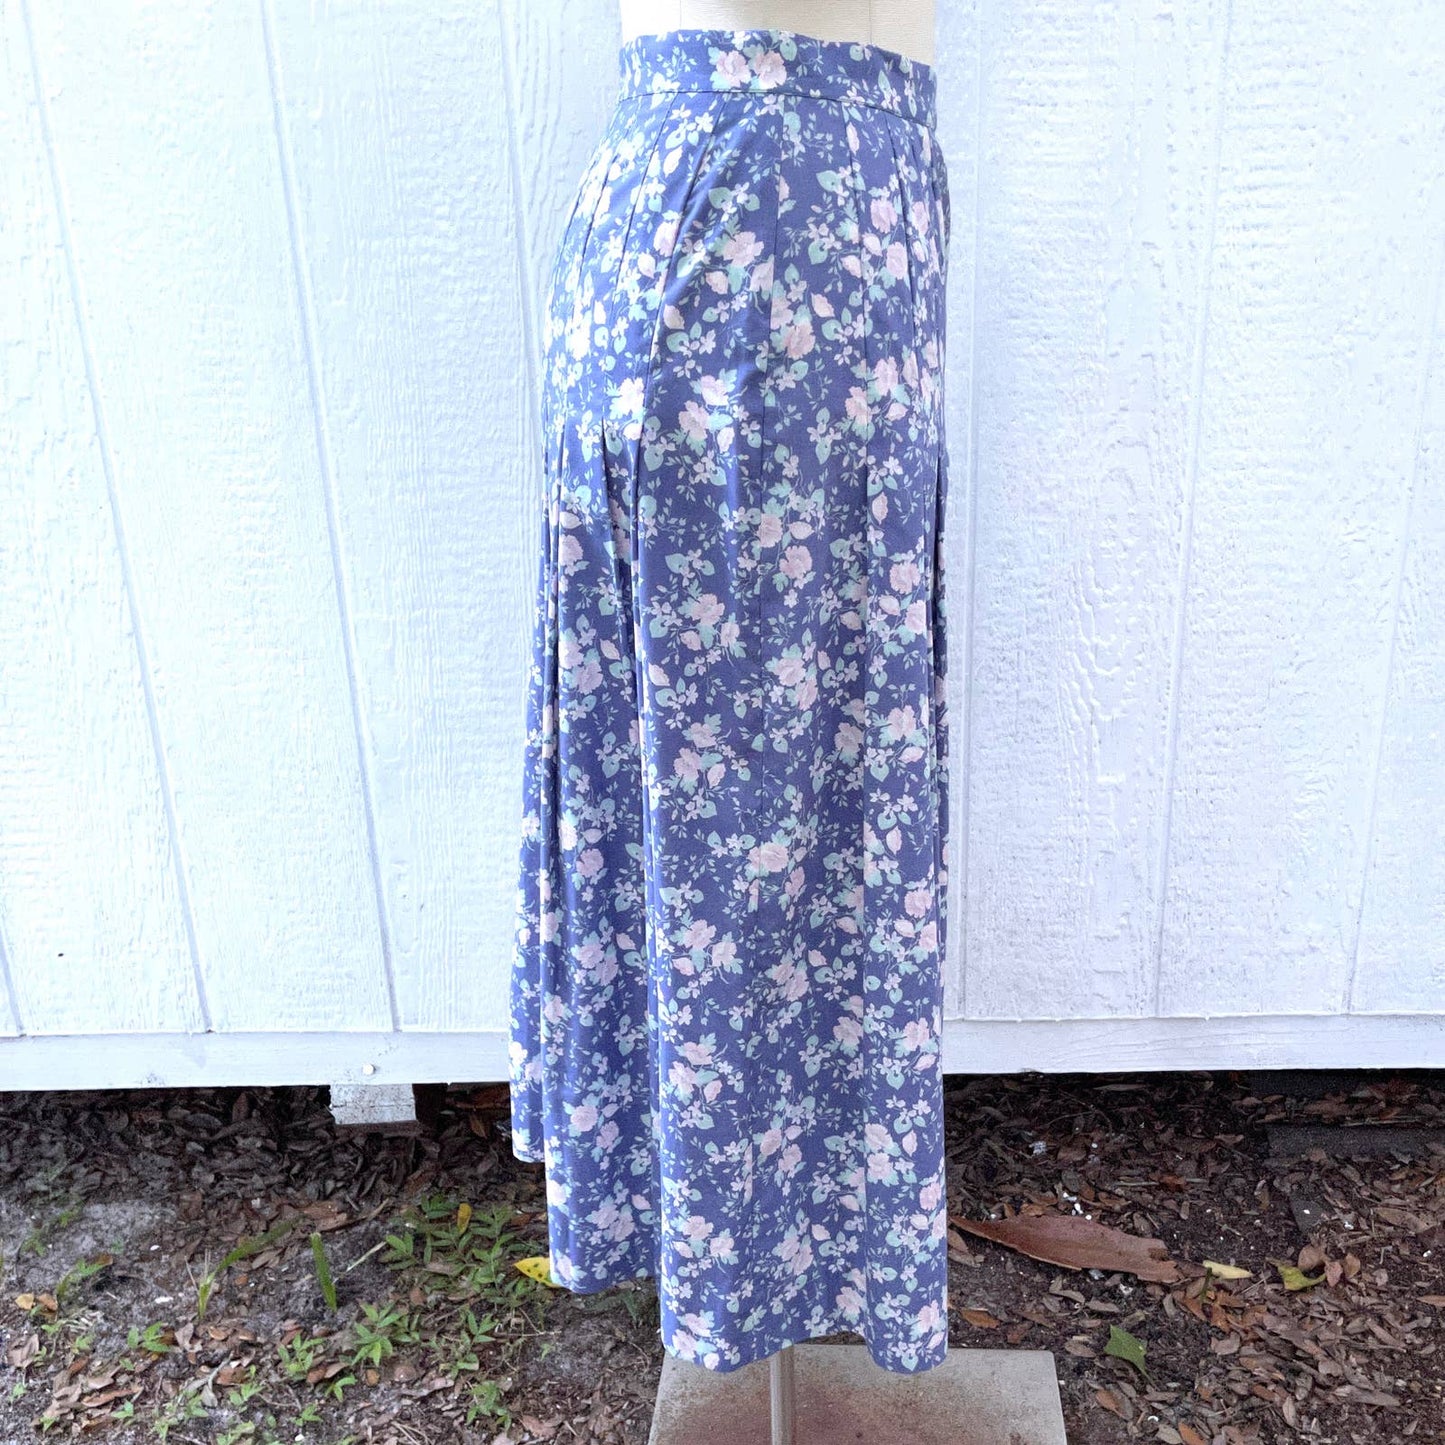 Vintage 90s Purple Floral Midi Skirt Cotton Grunge Style Laura Ashley Size 12